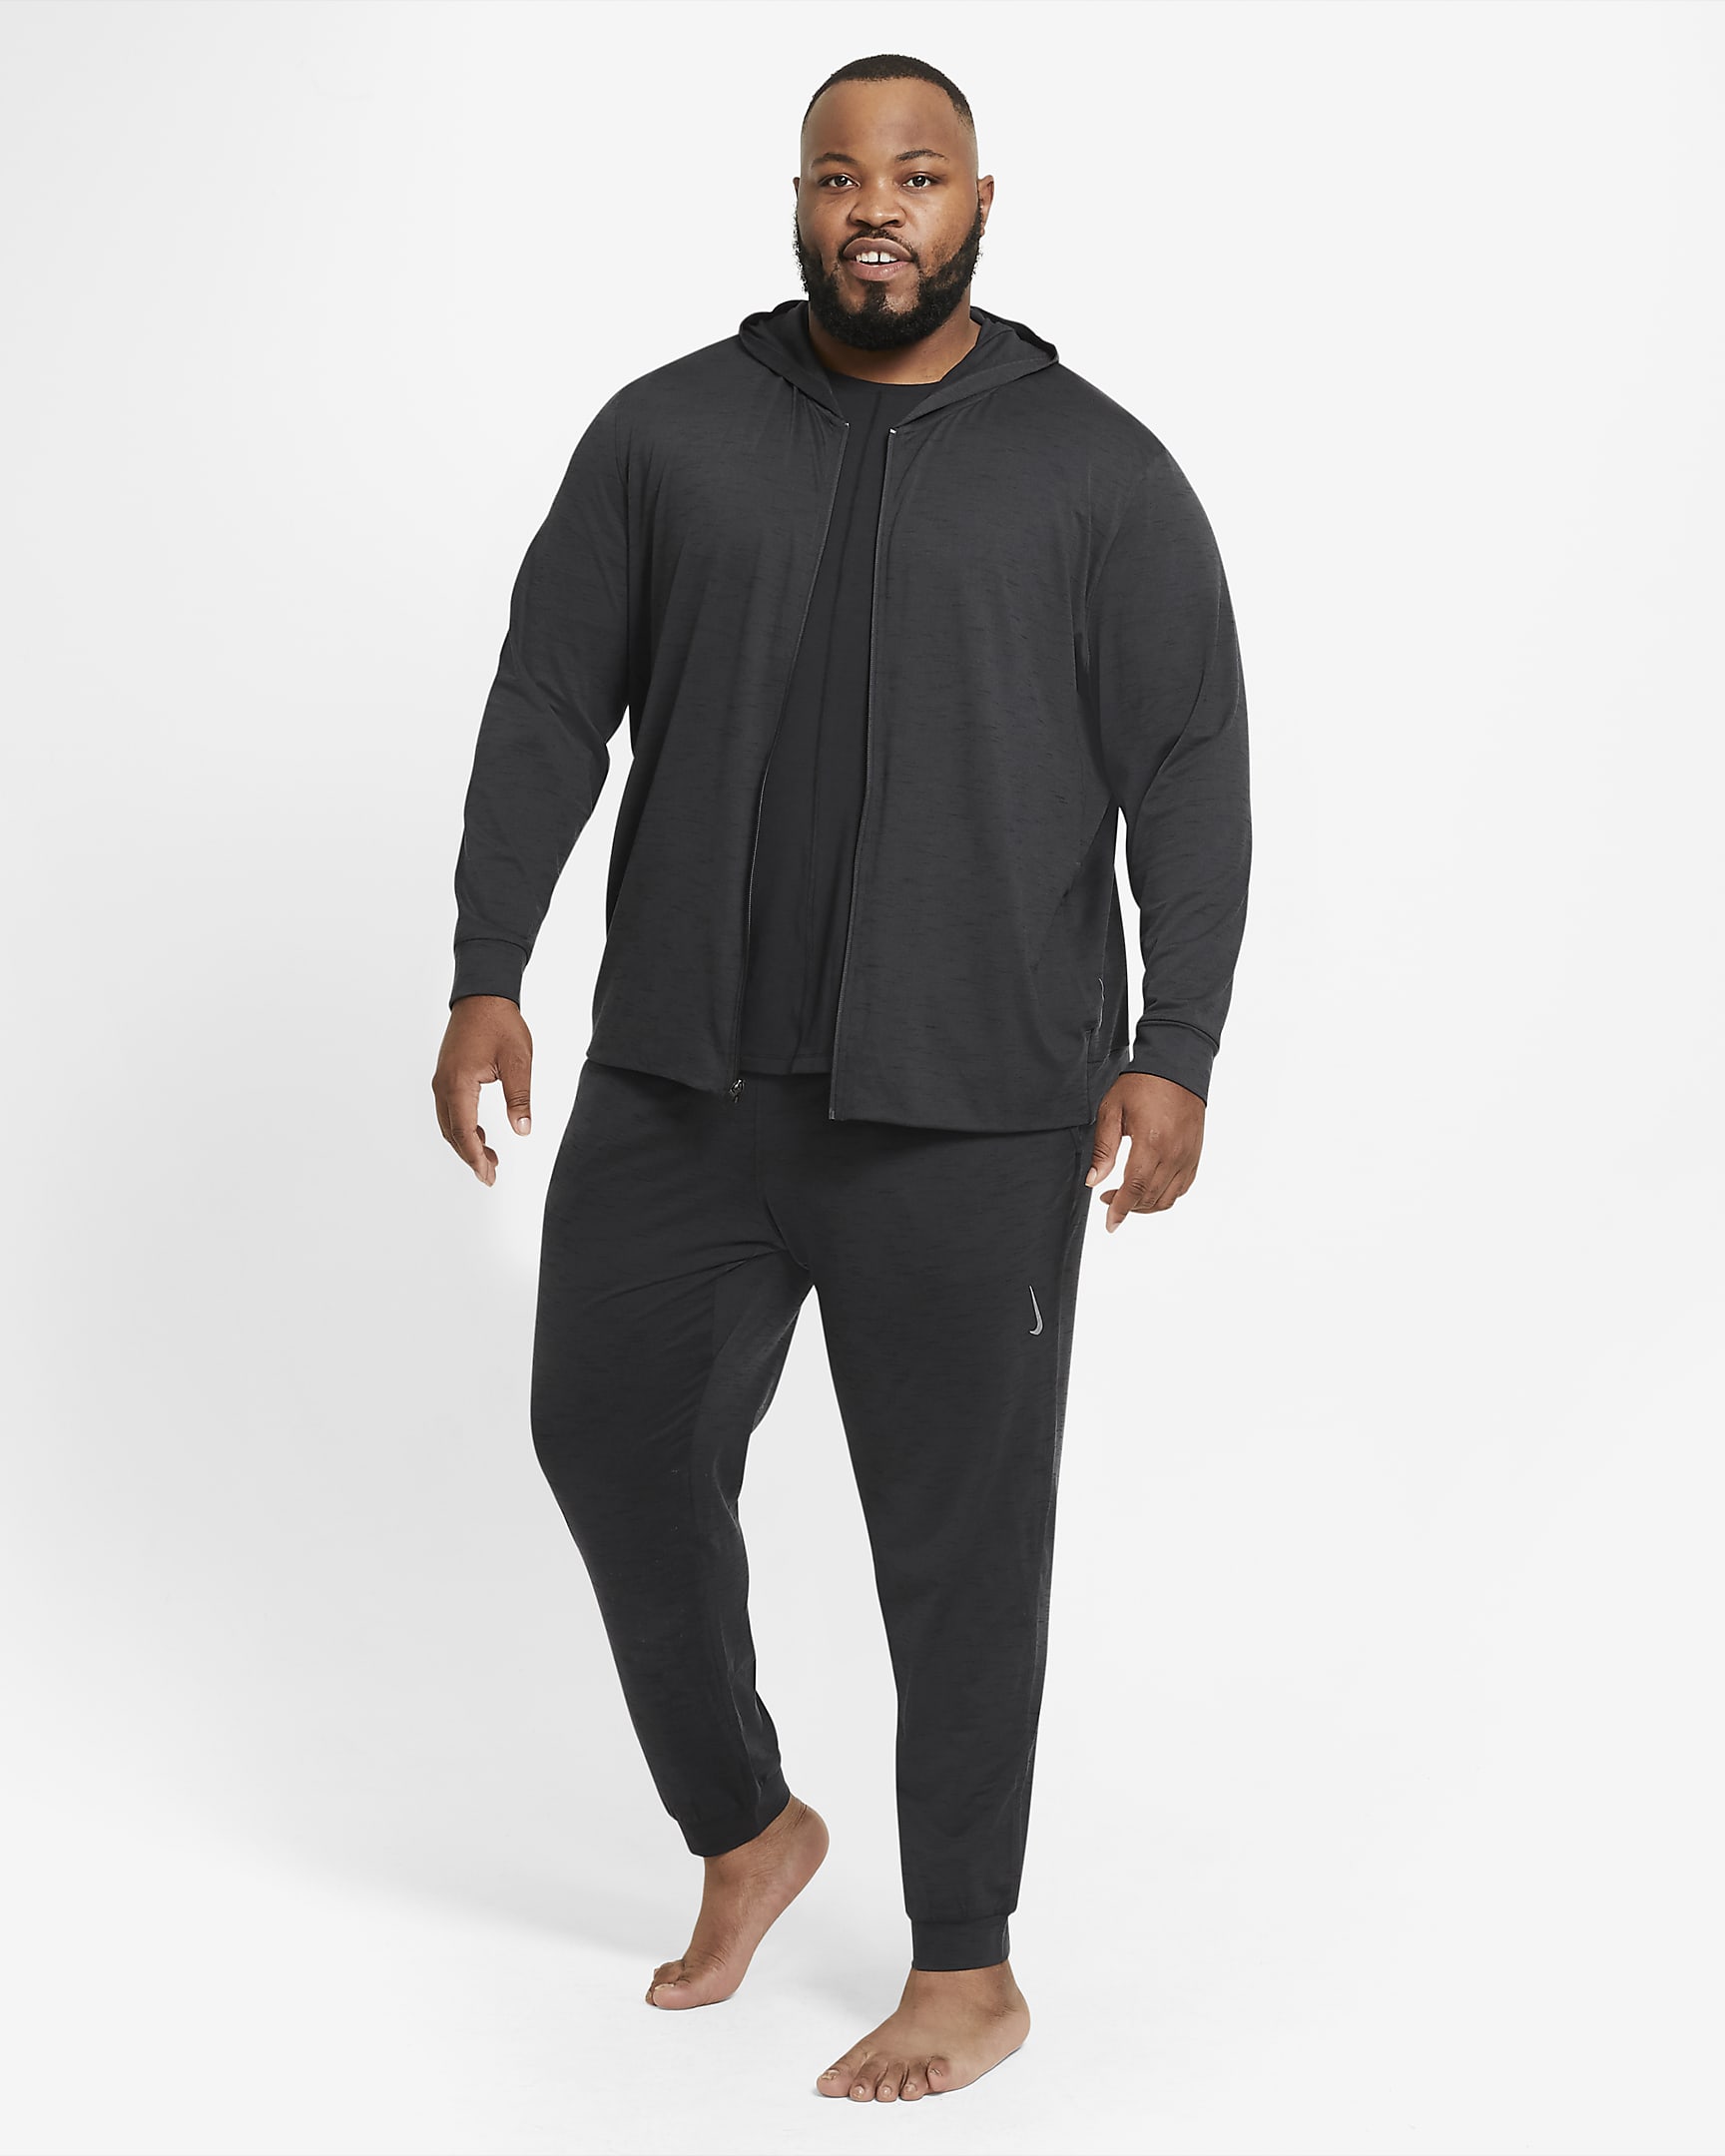 Nike Yoga Dri-FIT Men's Pants - Off Noir/Black/Heather